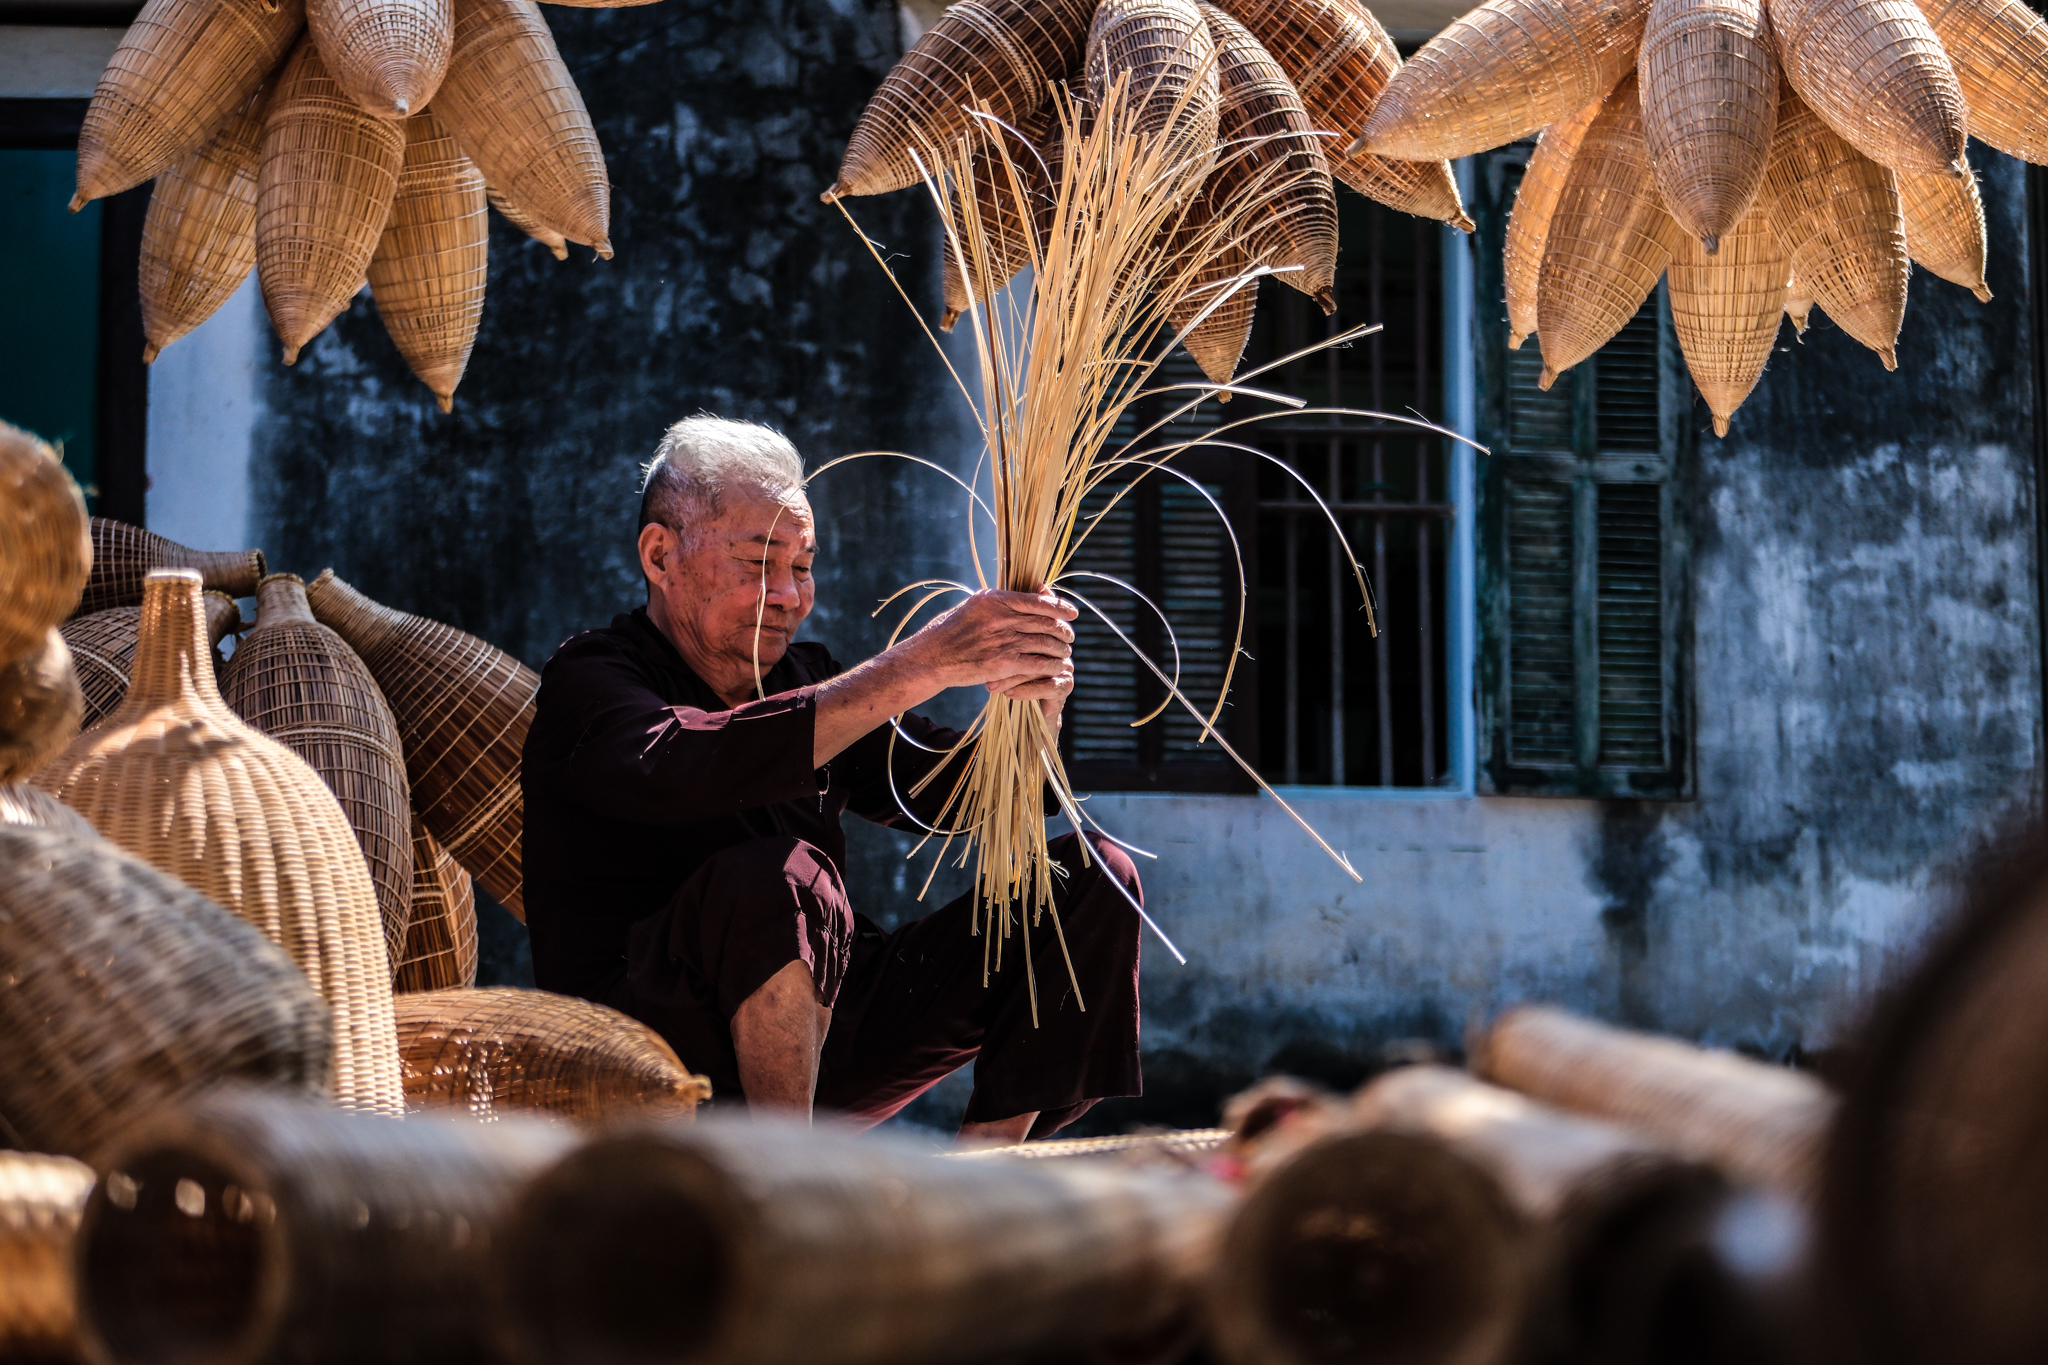 Luong Son Bac, 83, is preparing bamboo strings to make đó. Photo: Nam Tran / Tuoi Tre News